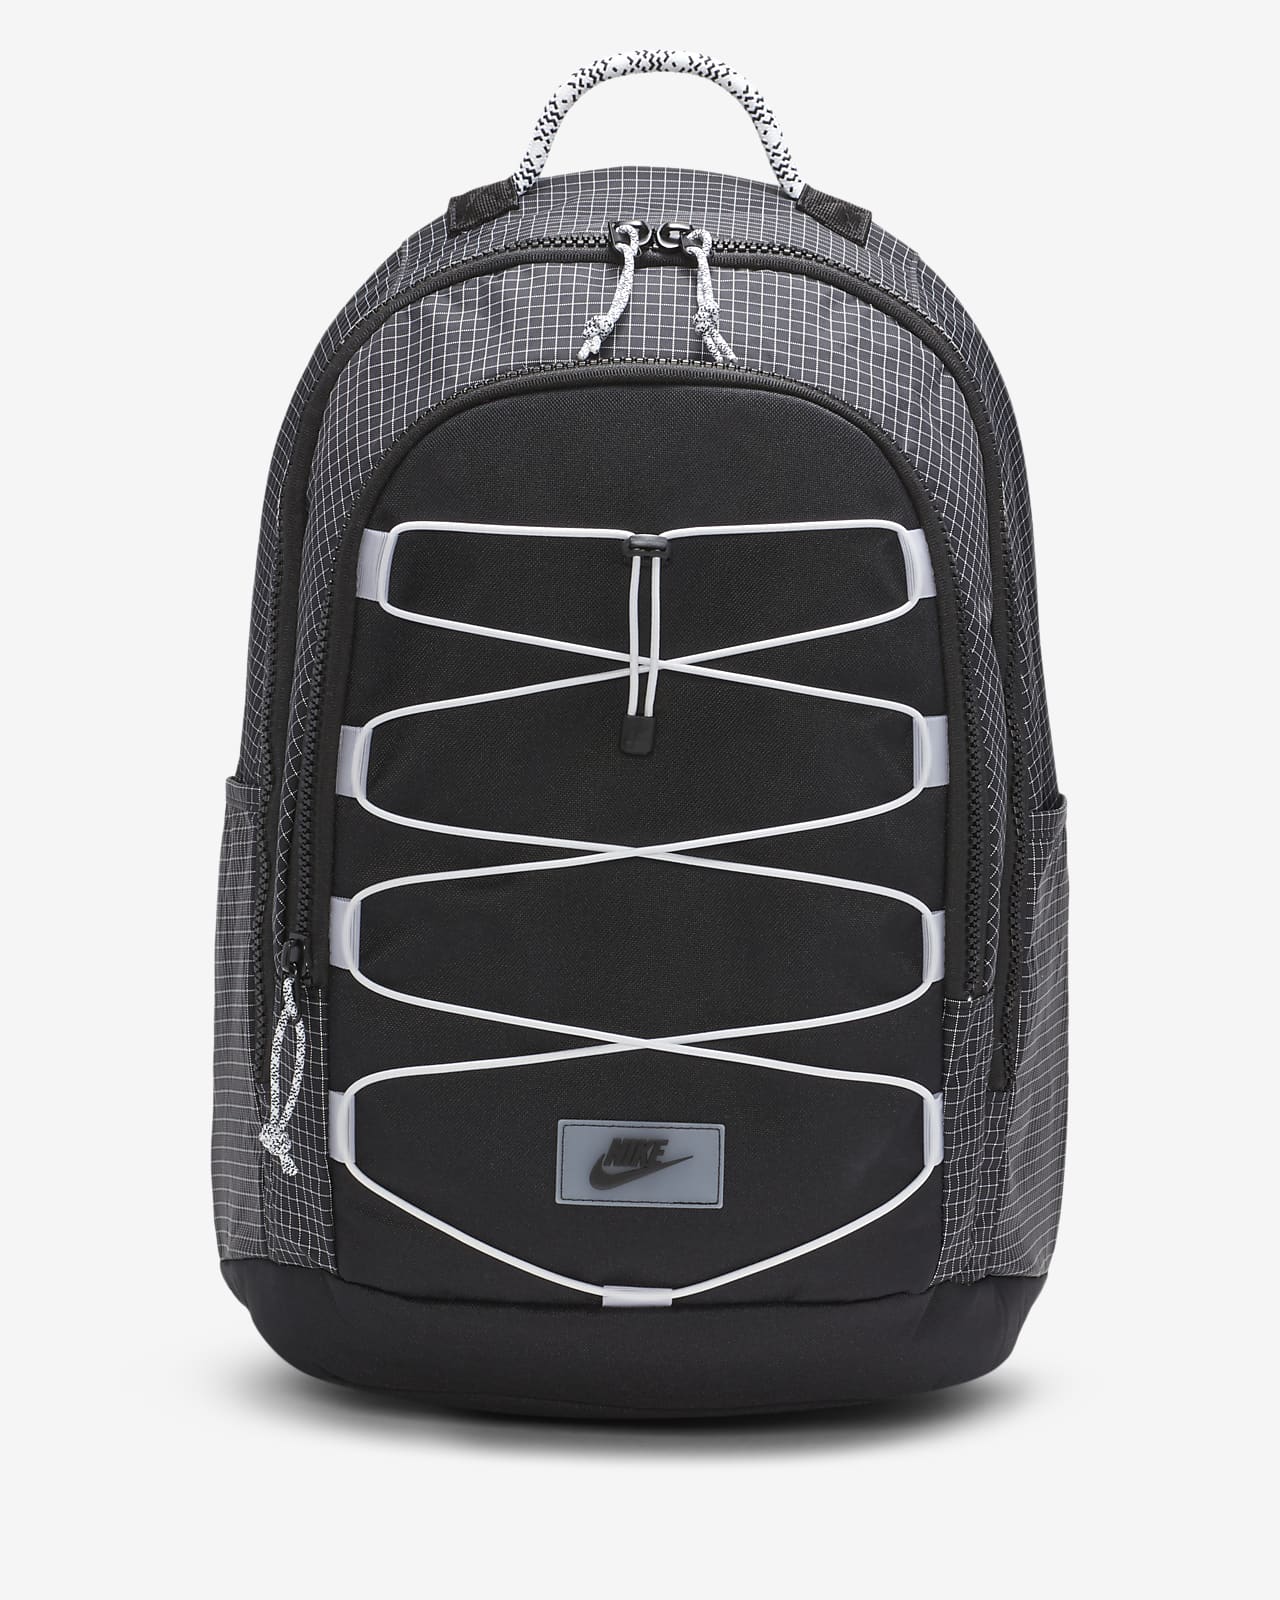 hayward 2.0 backpack nike